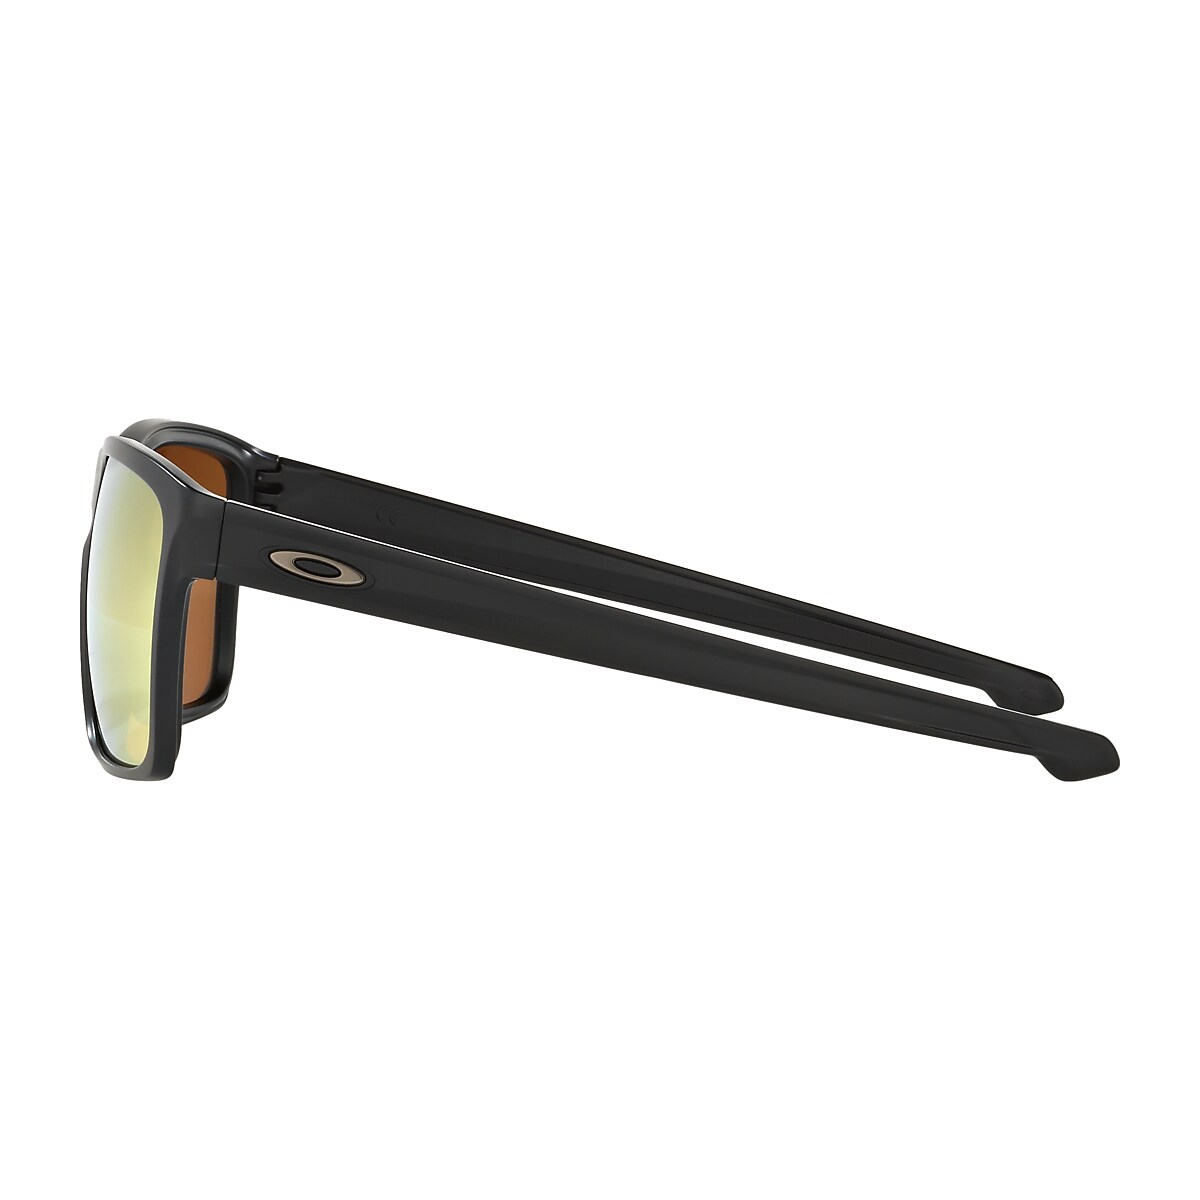 Sliver™ XL 24K Iridium Lenses, Matte Black Frame Sunglasses 